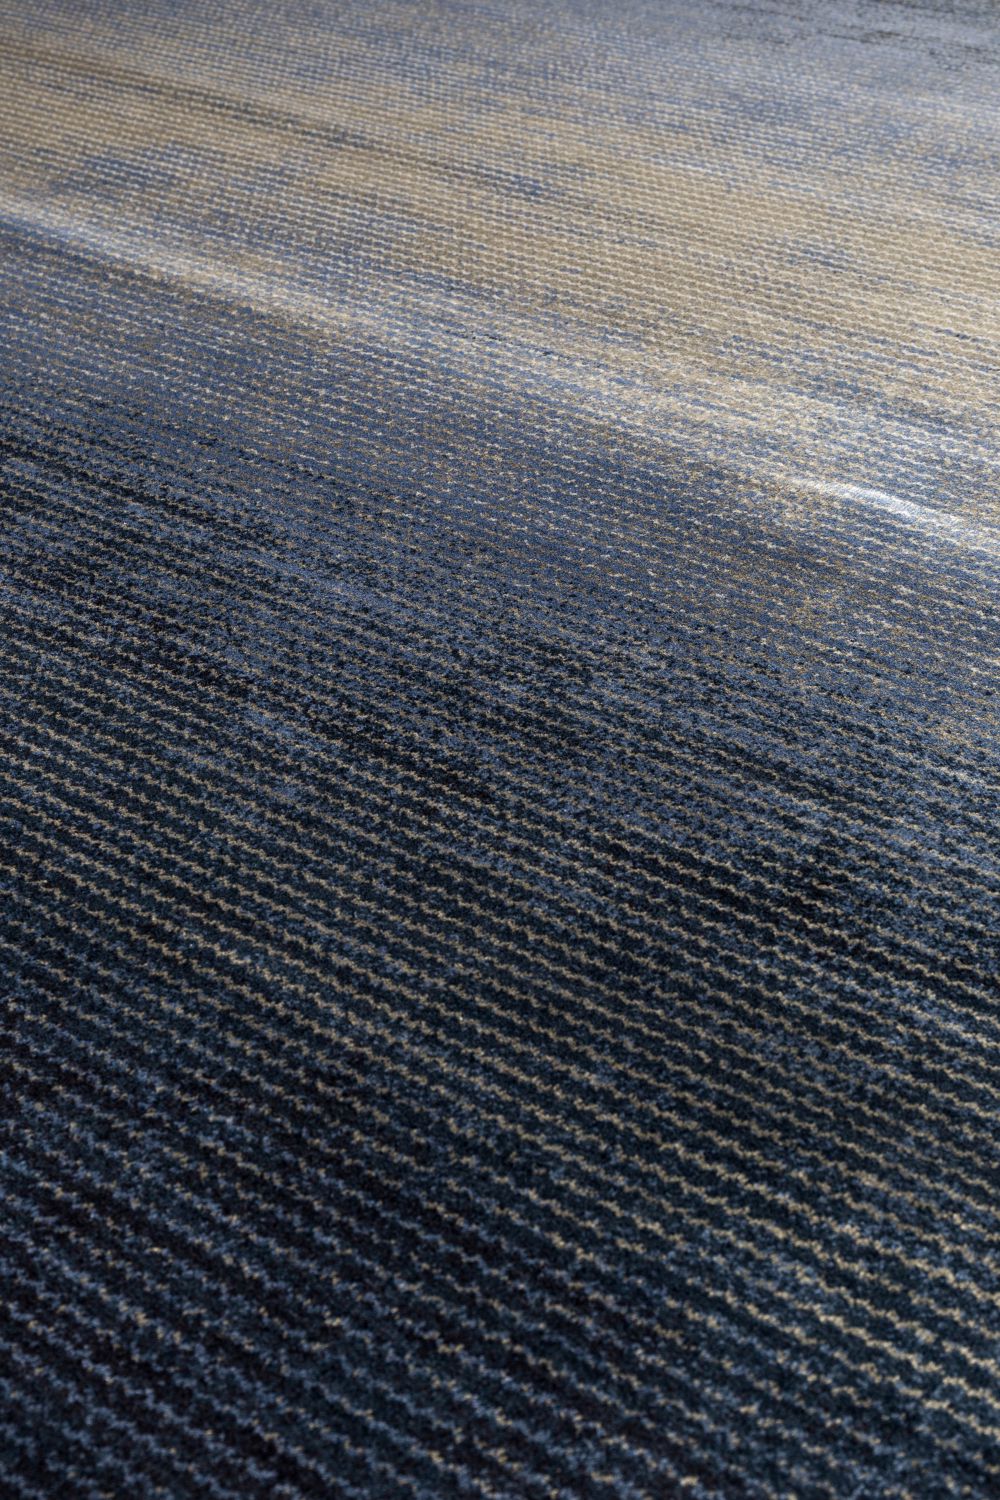  Zuiver-Zuiver Obi Carpet 200X300 Blue-Blue  53 